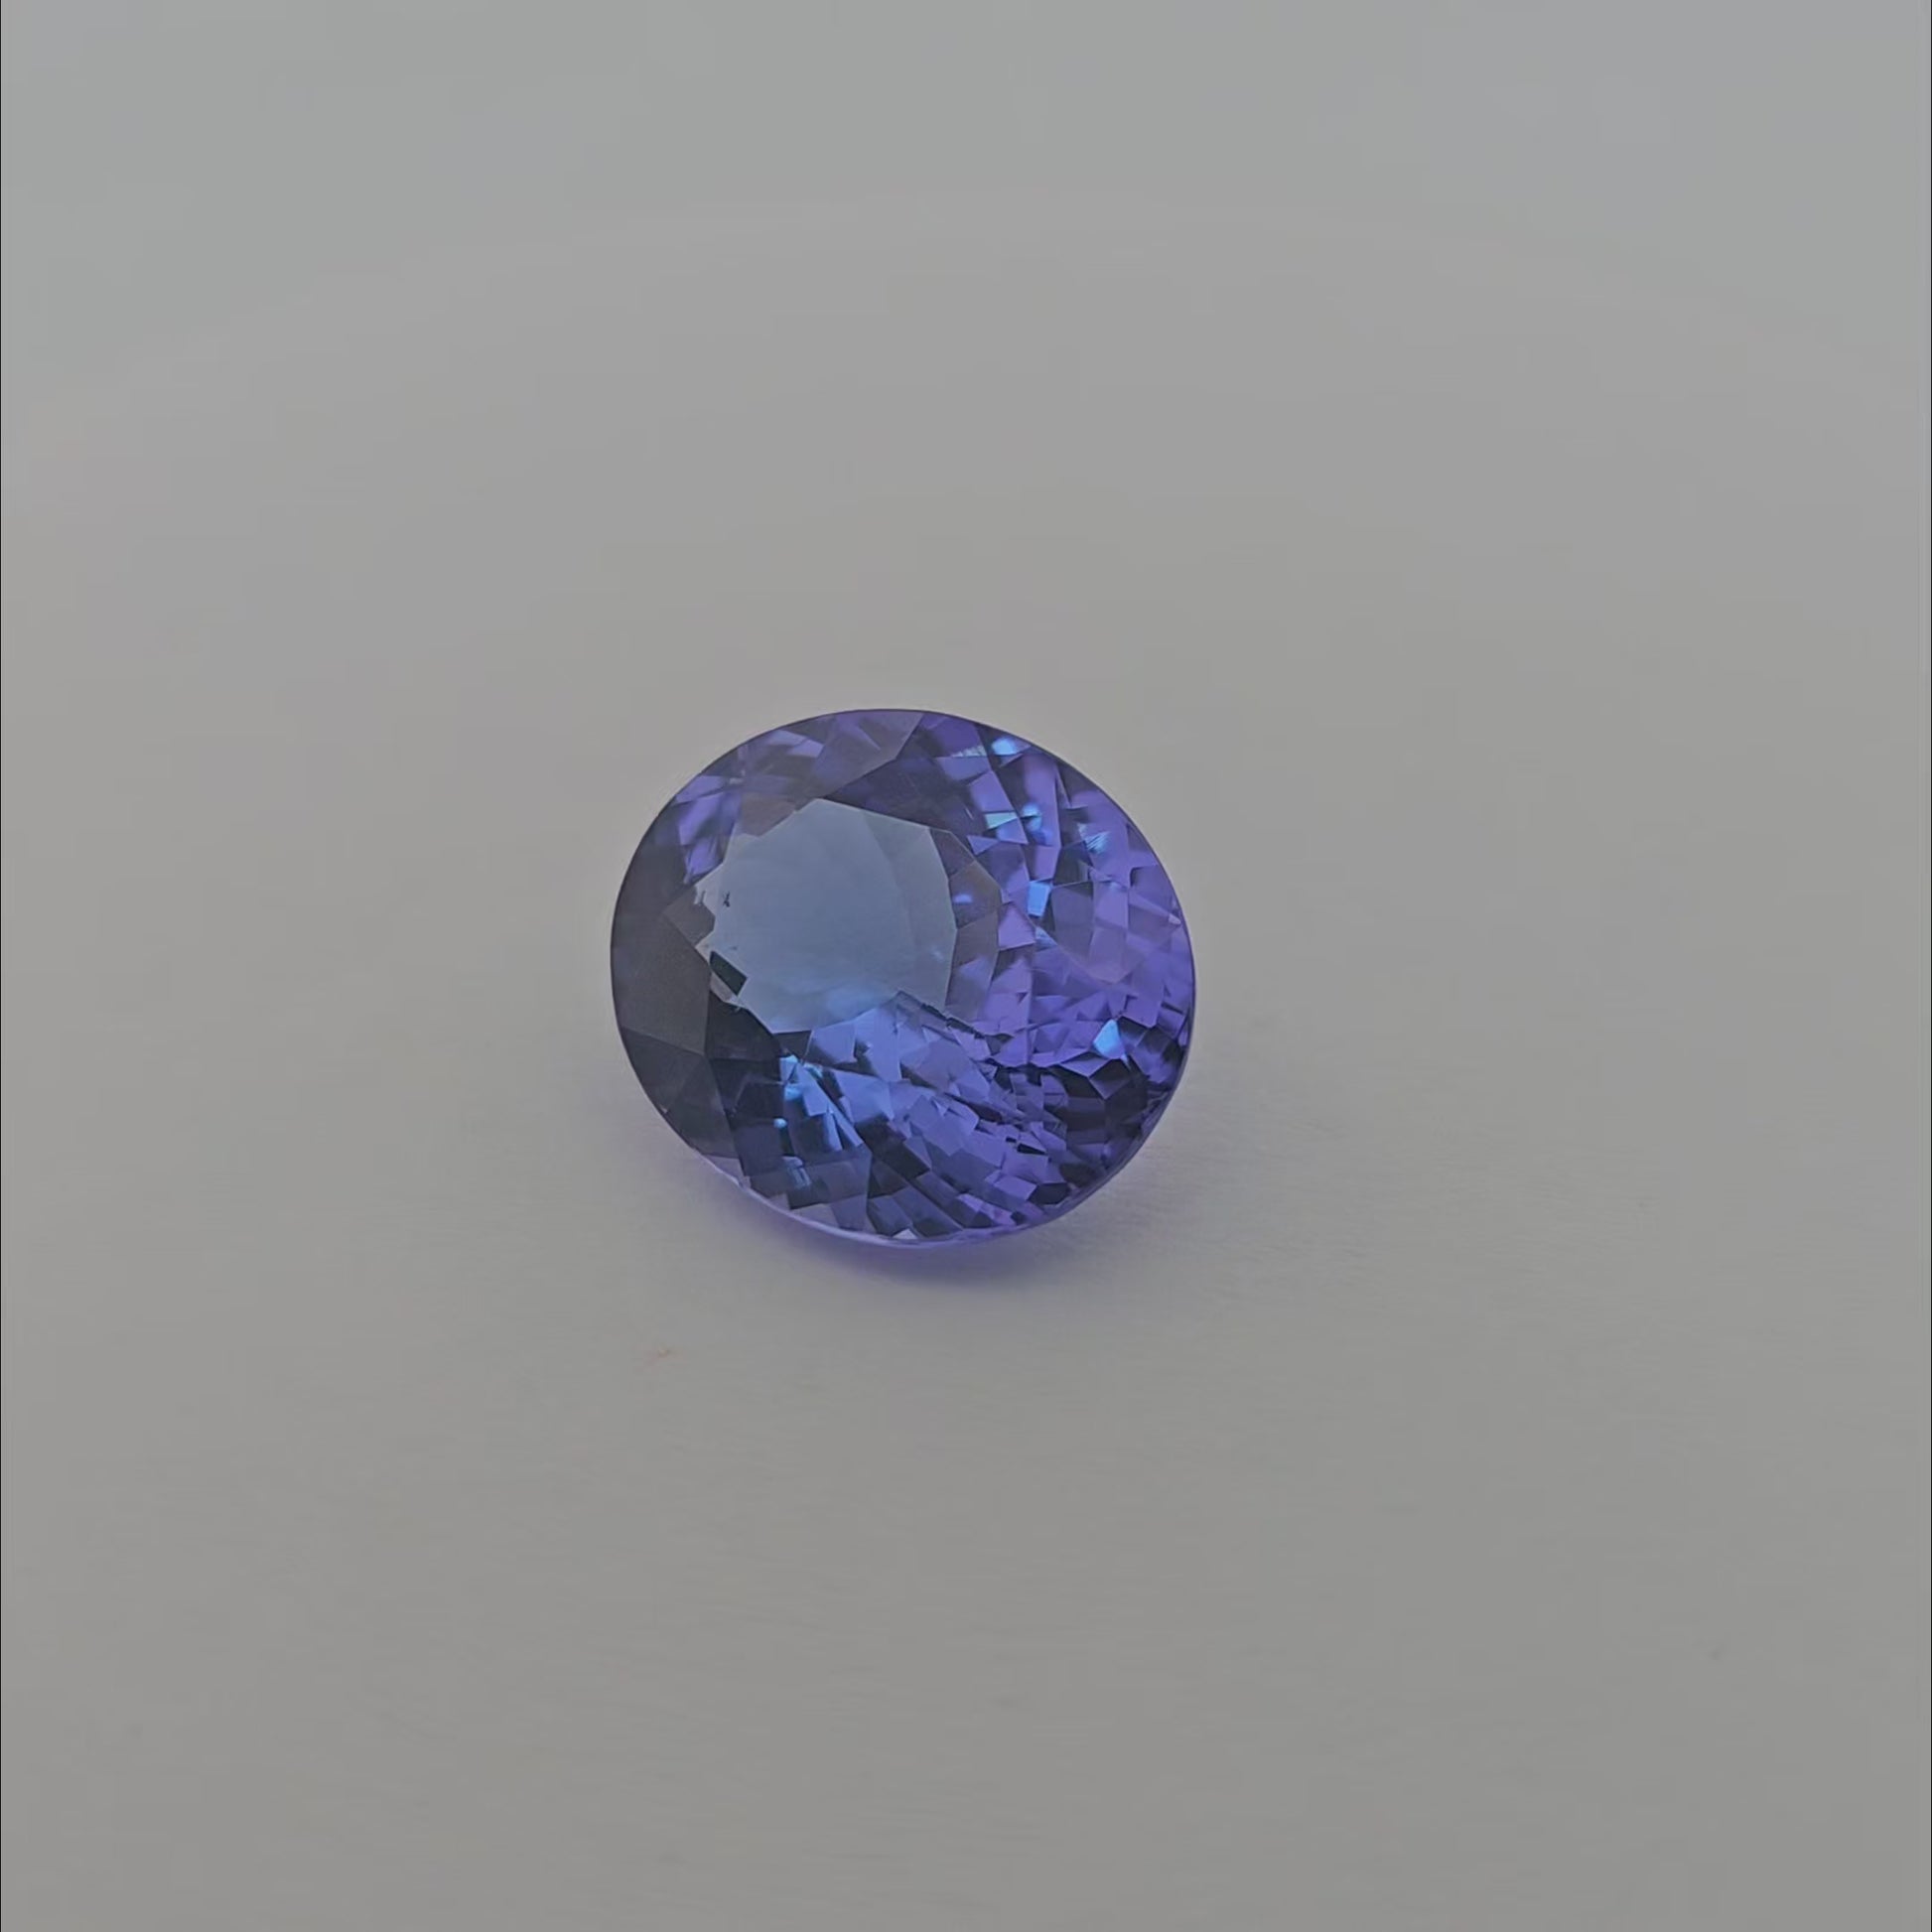 loose Natural Blue Tanzanite Stone 11.34 Carats Oval Cut (15.7 x 13.3 mm) 